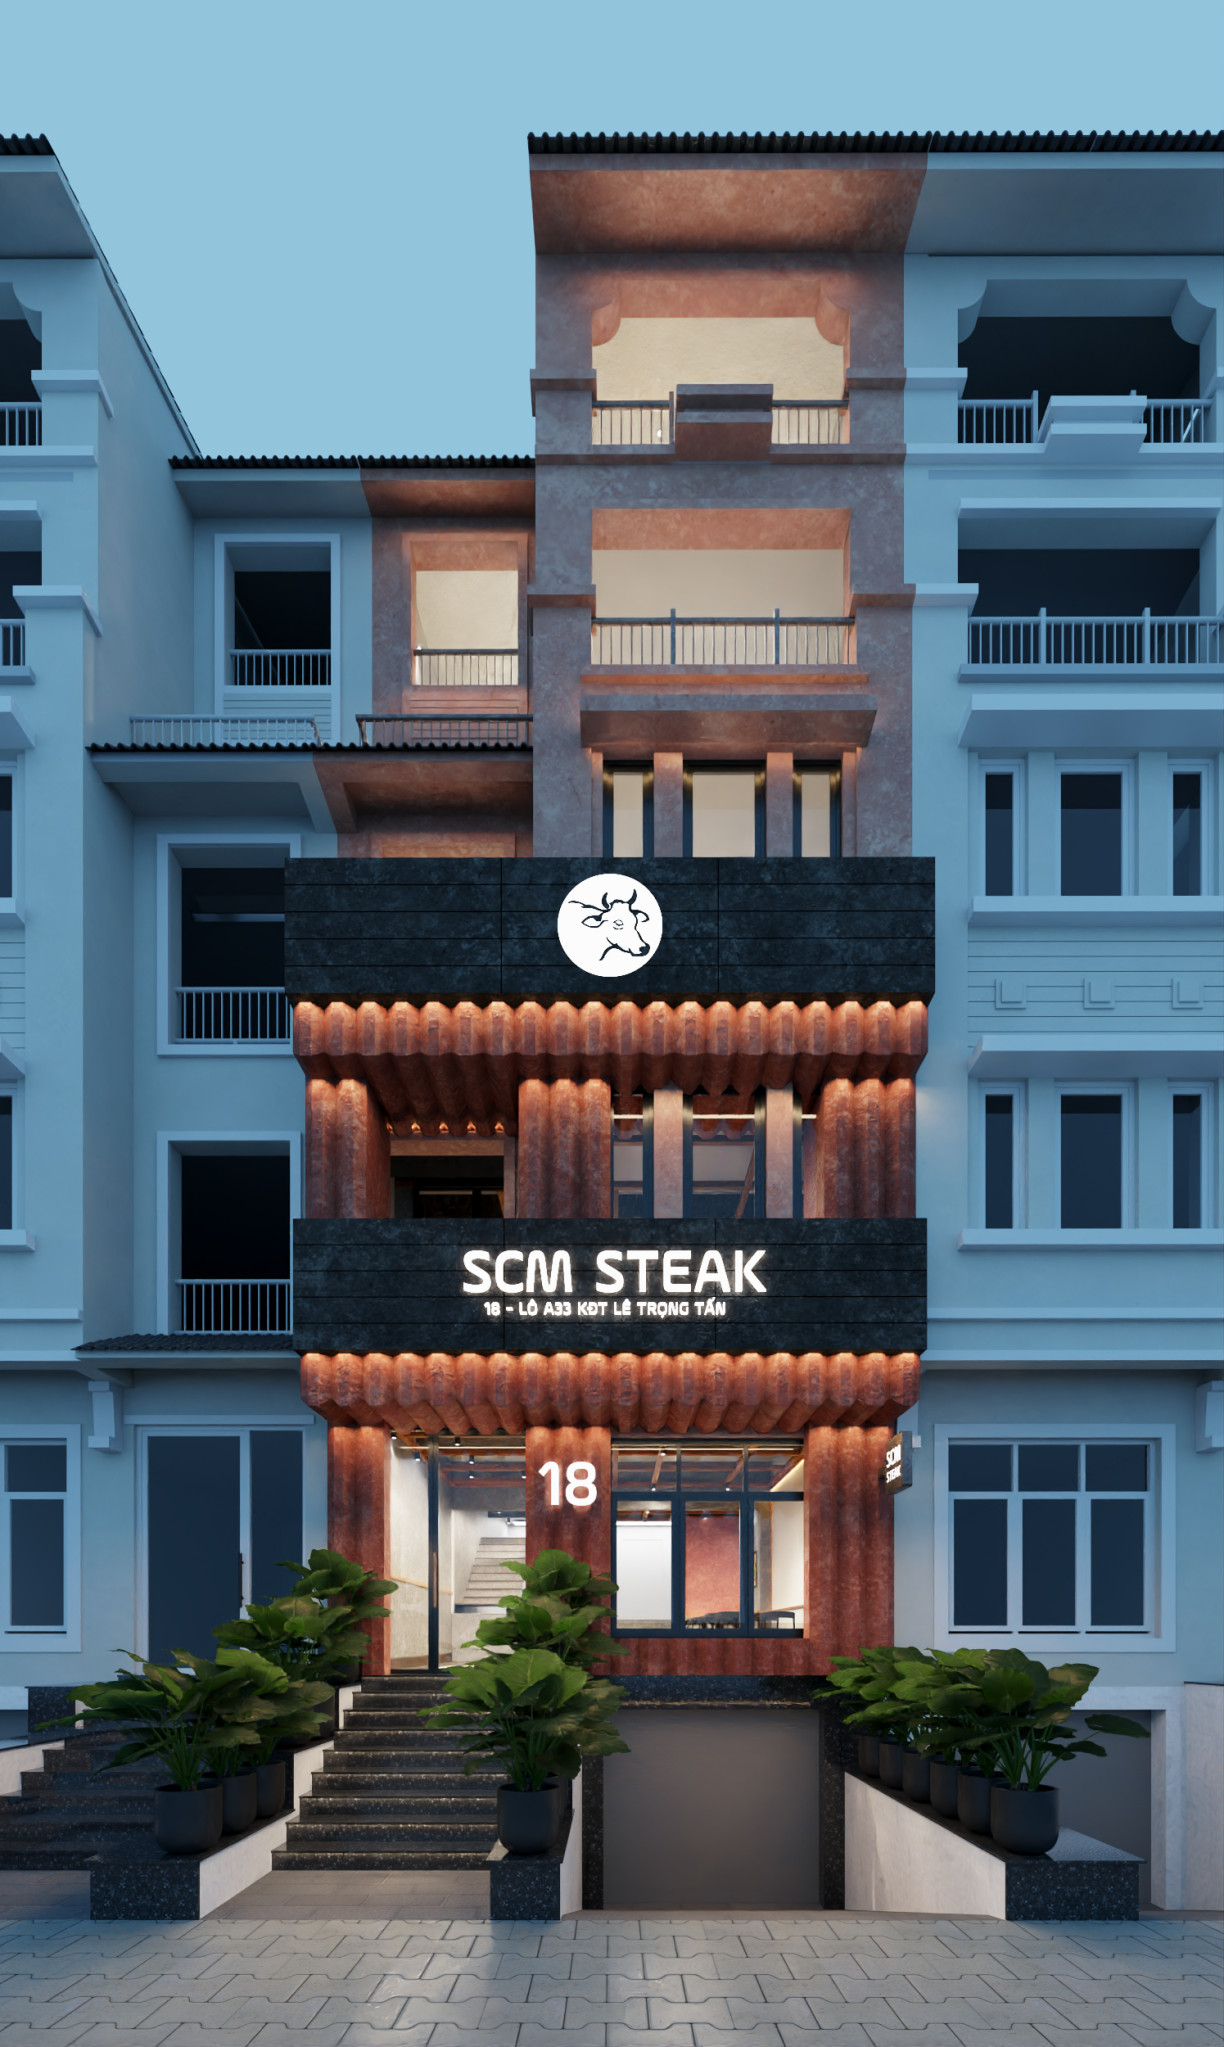 The design of SCM Steakhouse